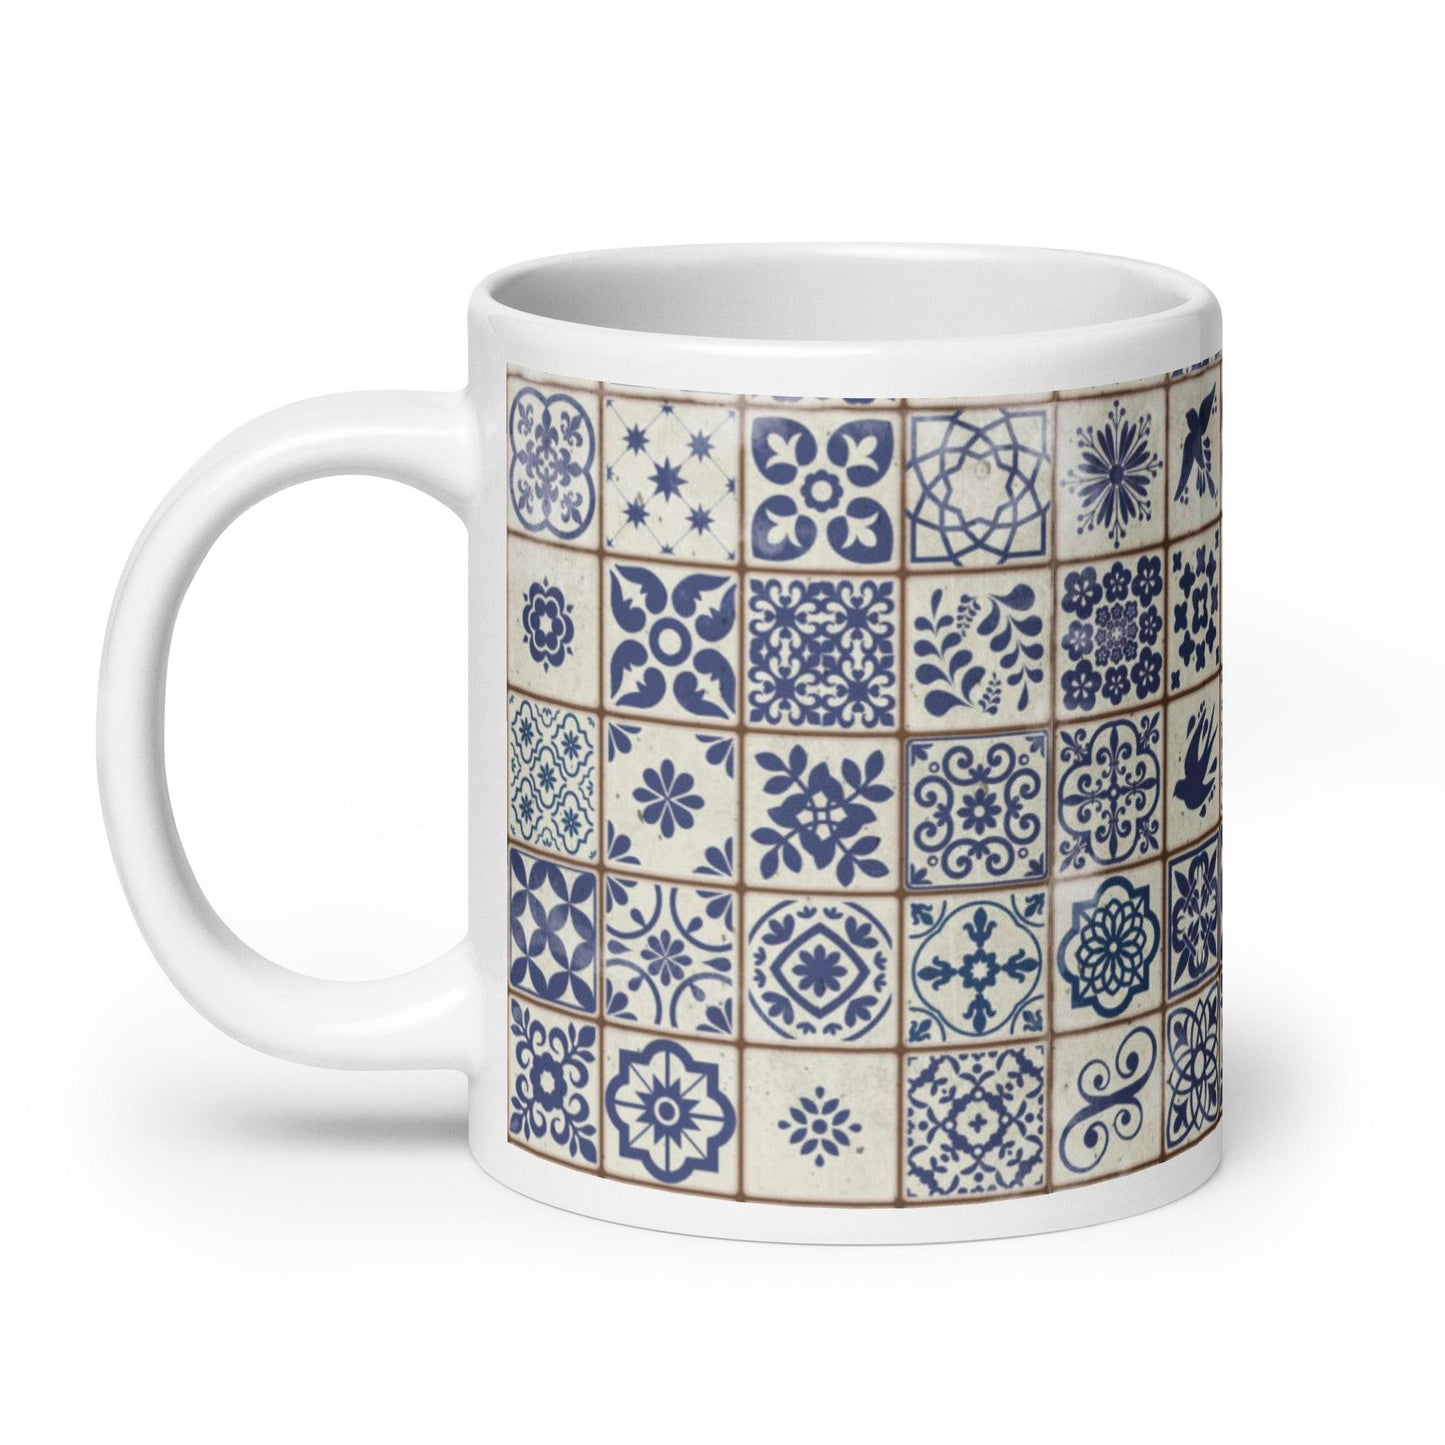 Portuguese Azulejo Tile Mug - The Global Wanderer